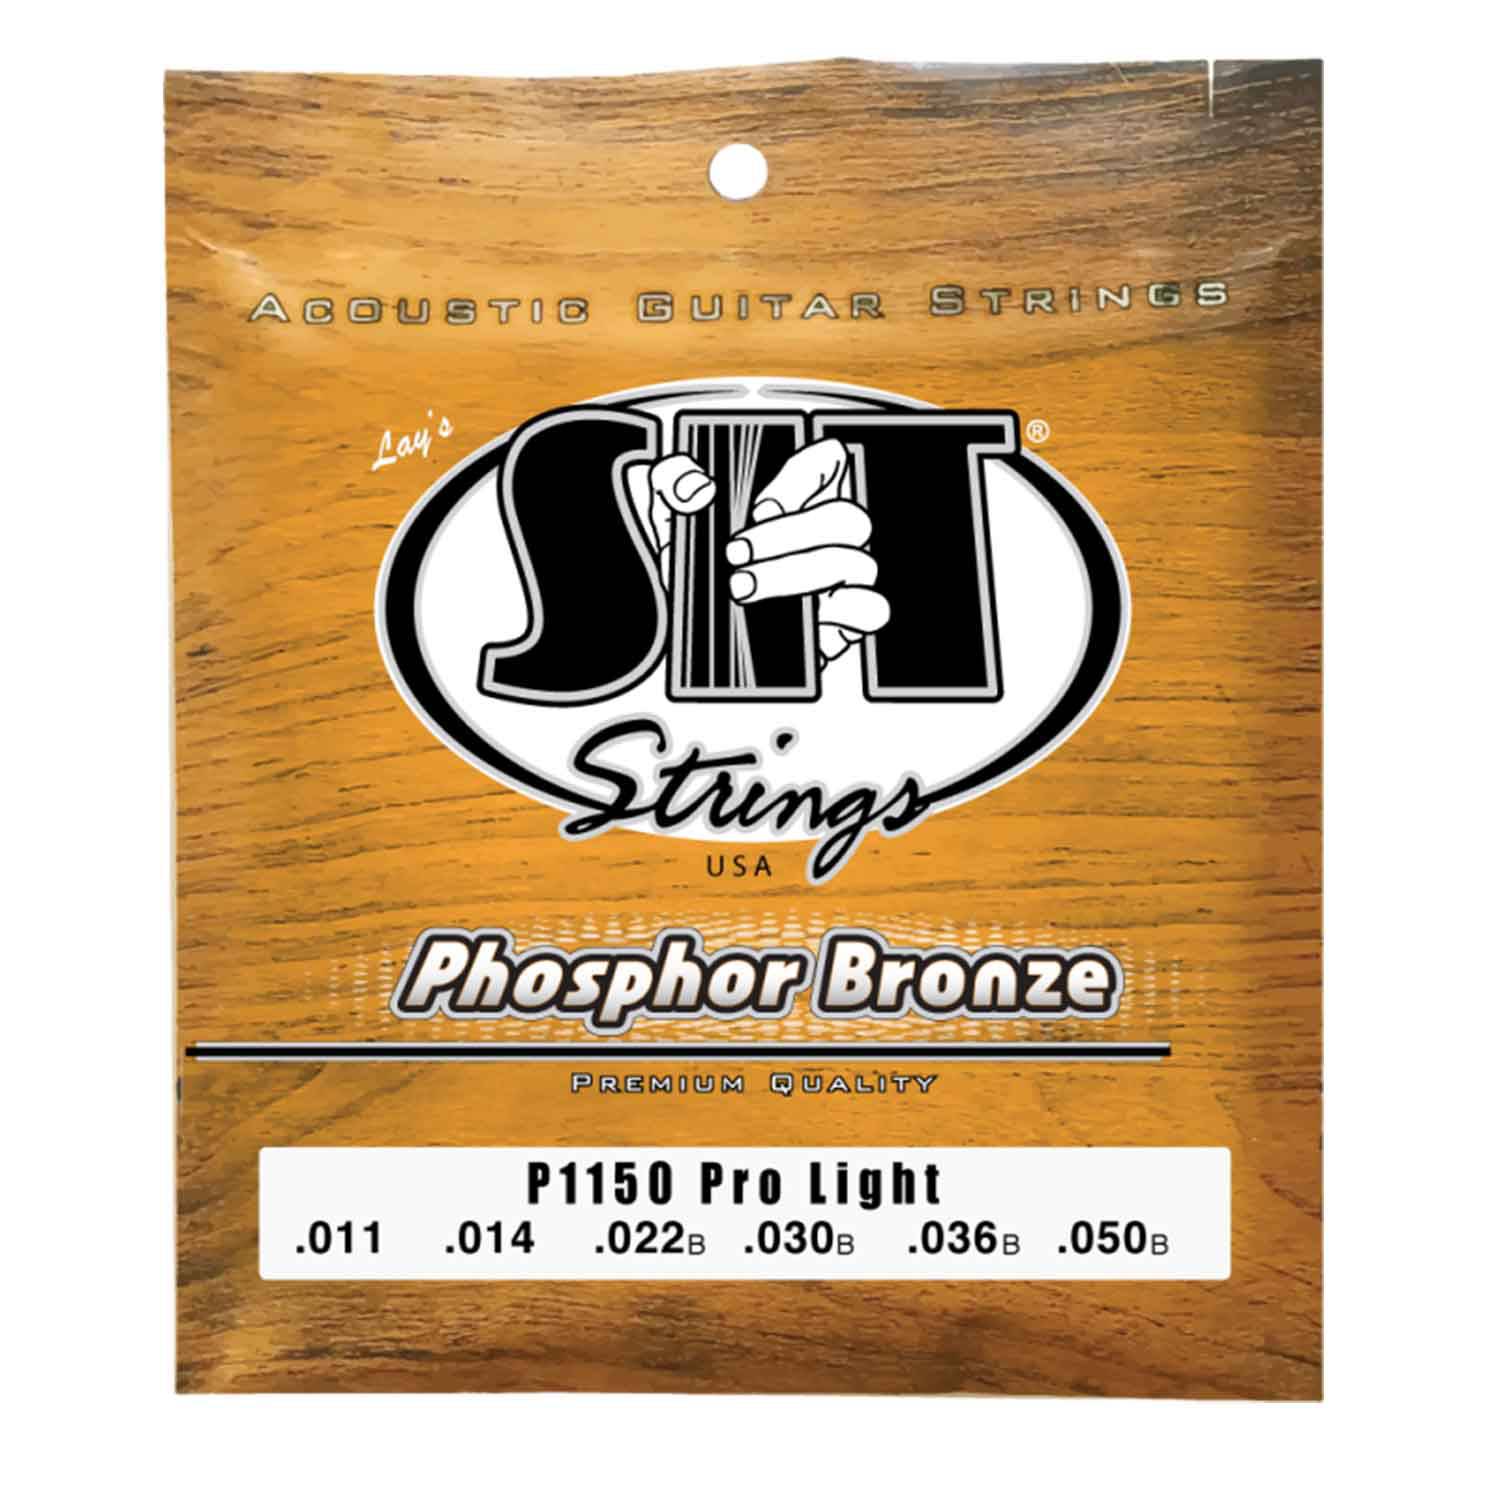 SIT Strings P1150 Pro Light Phosphor Bronze Acoustic Guitar Strings - Hollywood DJ